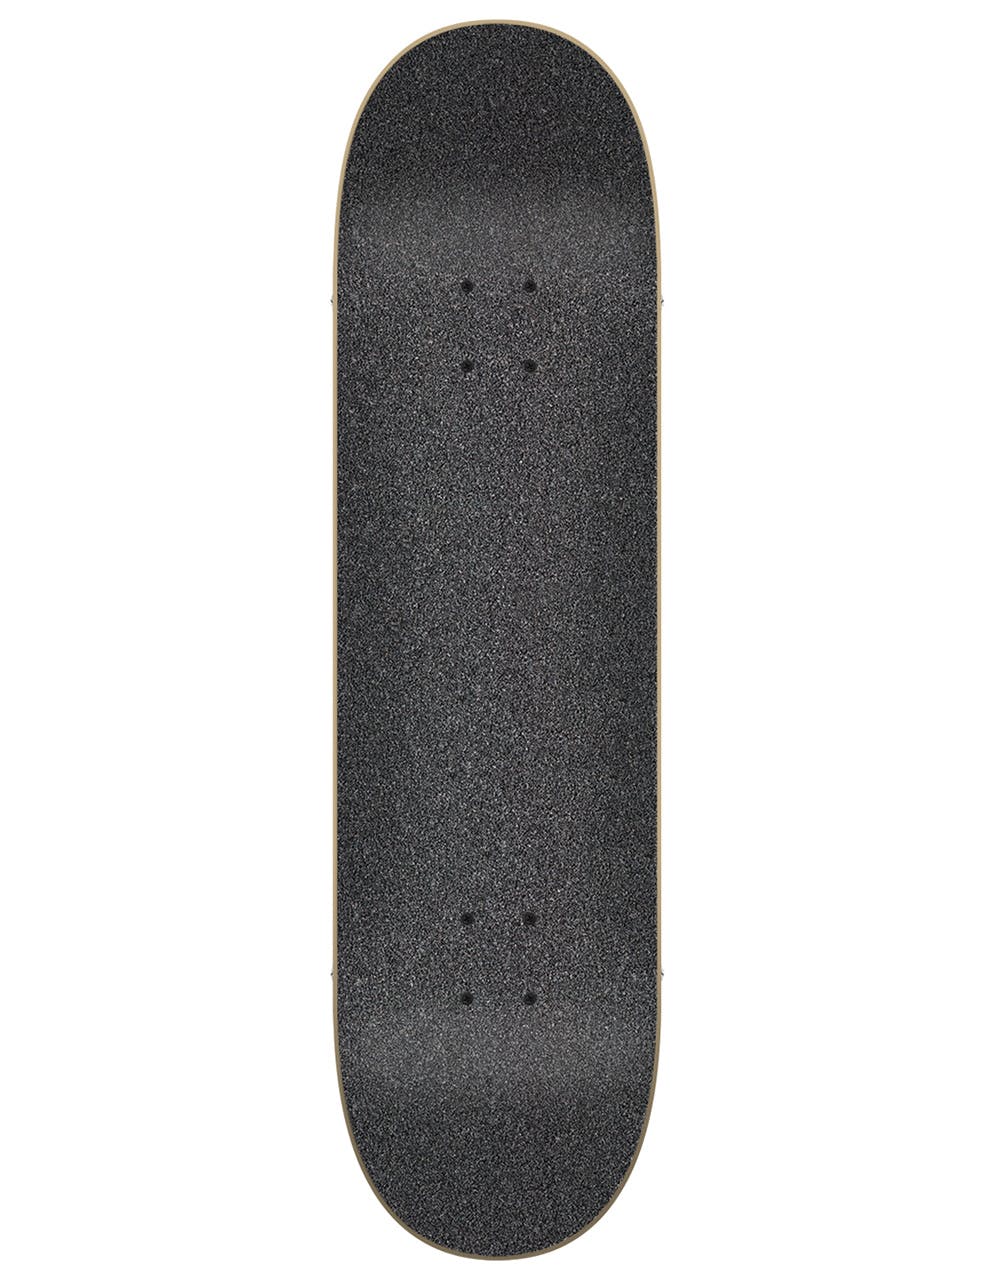 Flip Odyssey Capsule Complete Skateboard - 7.5"